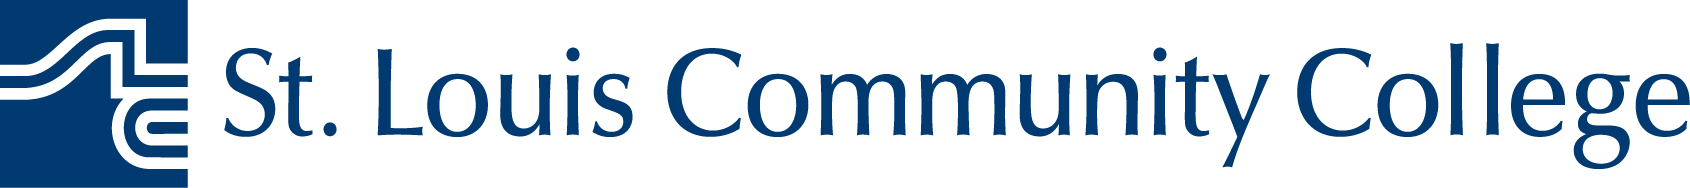 stlcc blue logo